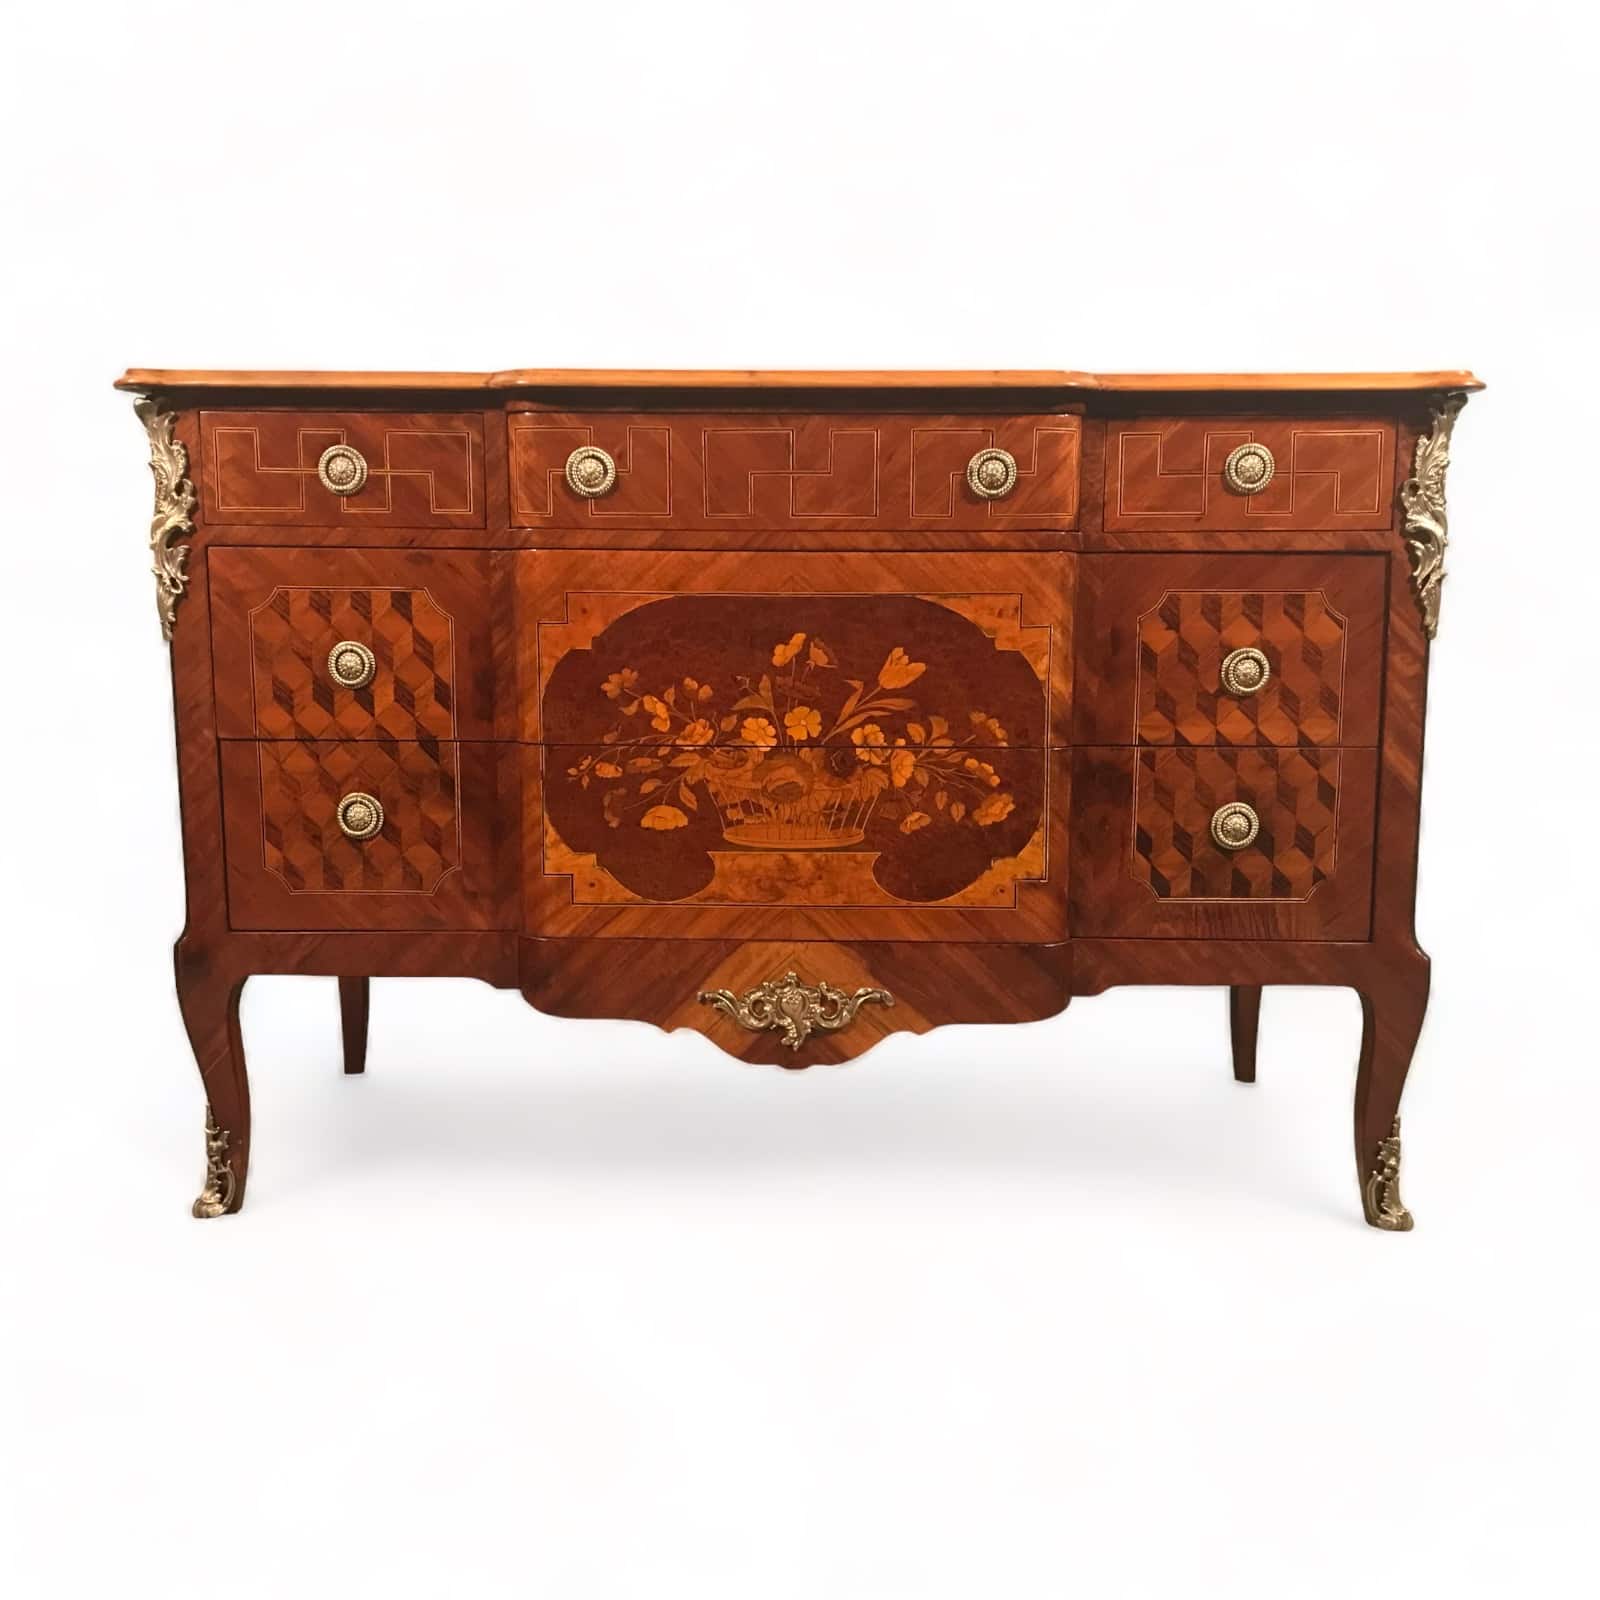 Elegance Revived: Characteristics of Louis XVI Furniture